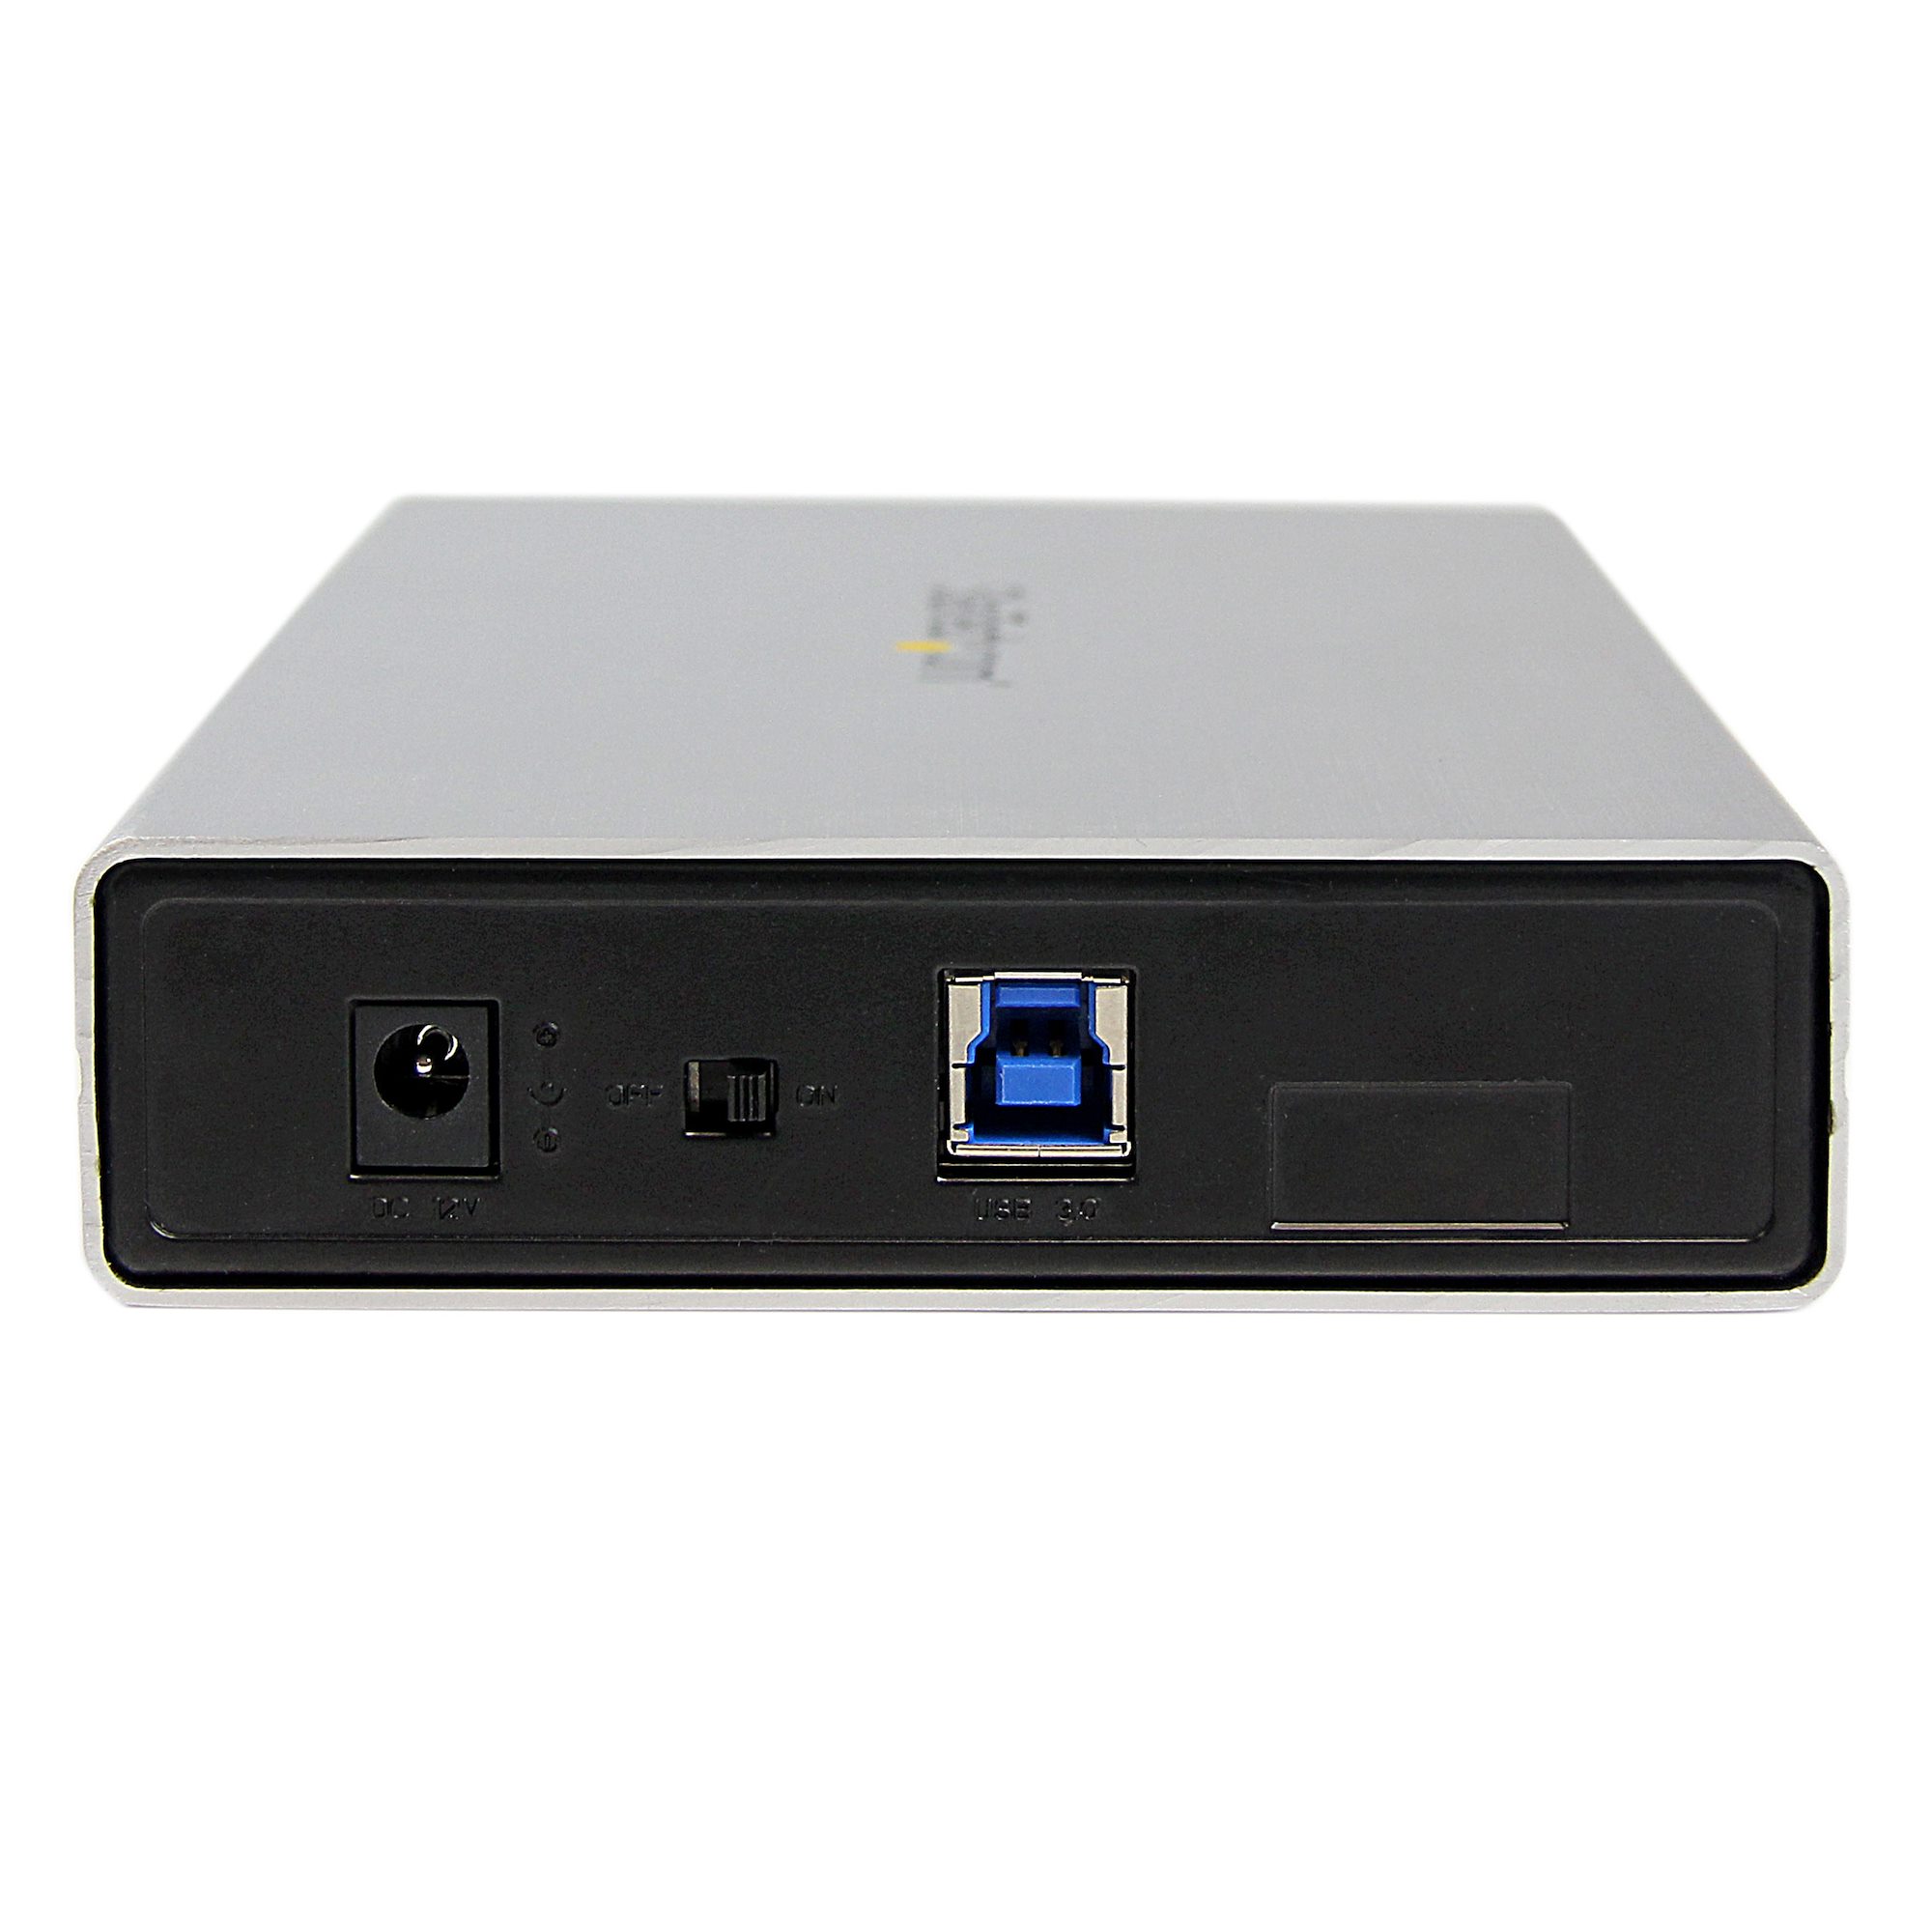 Hard Drive Enclosure for 3.5in SATA Drives – USB 3.0 BCI Imaging Supplies